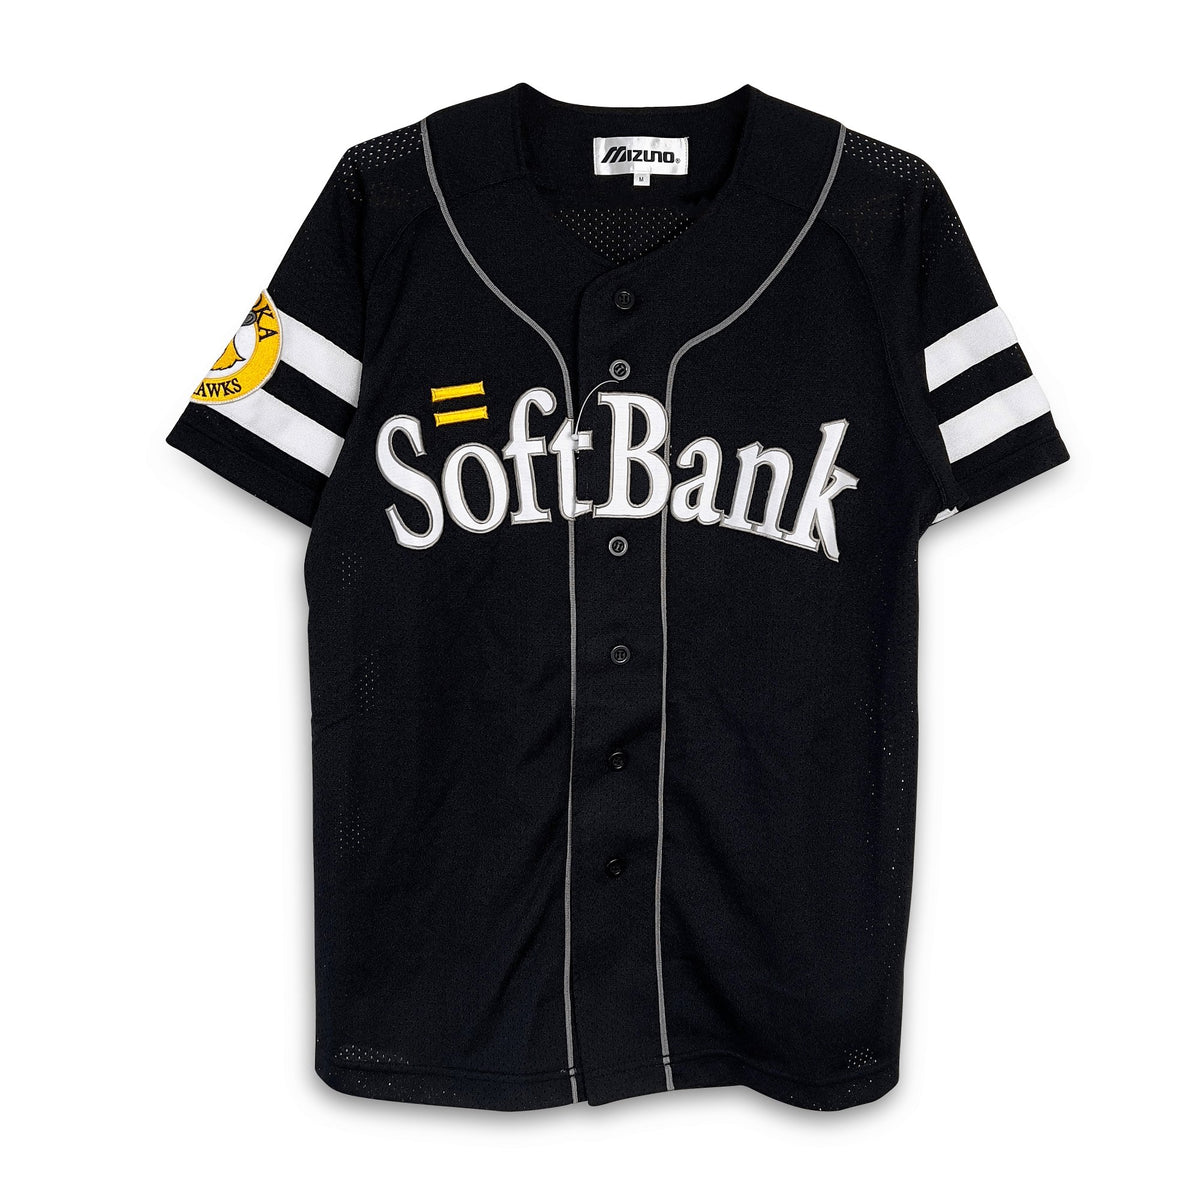 Japanese baseball jerseys for sale